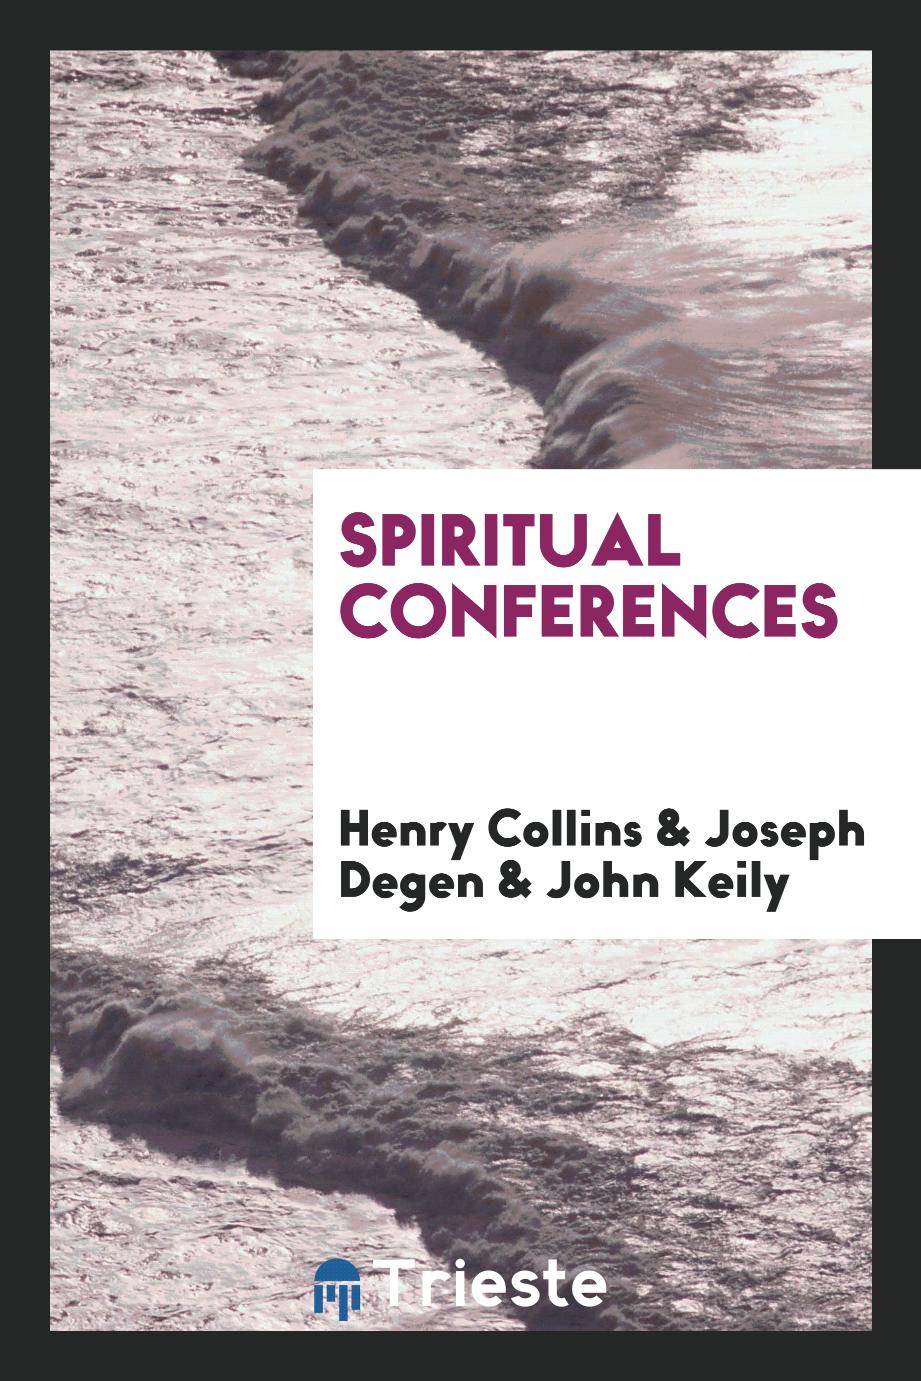 Spiritual conferences